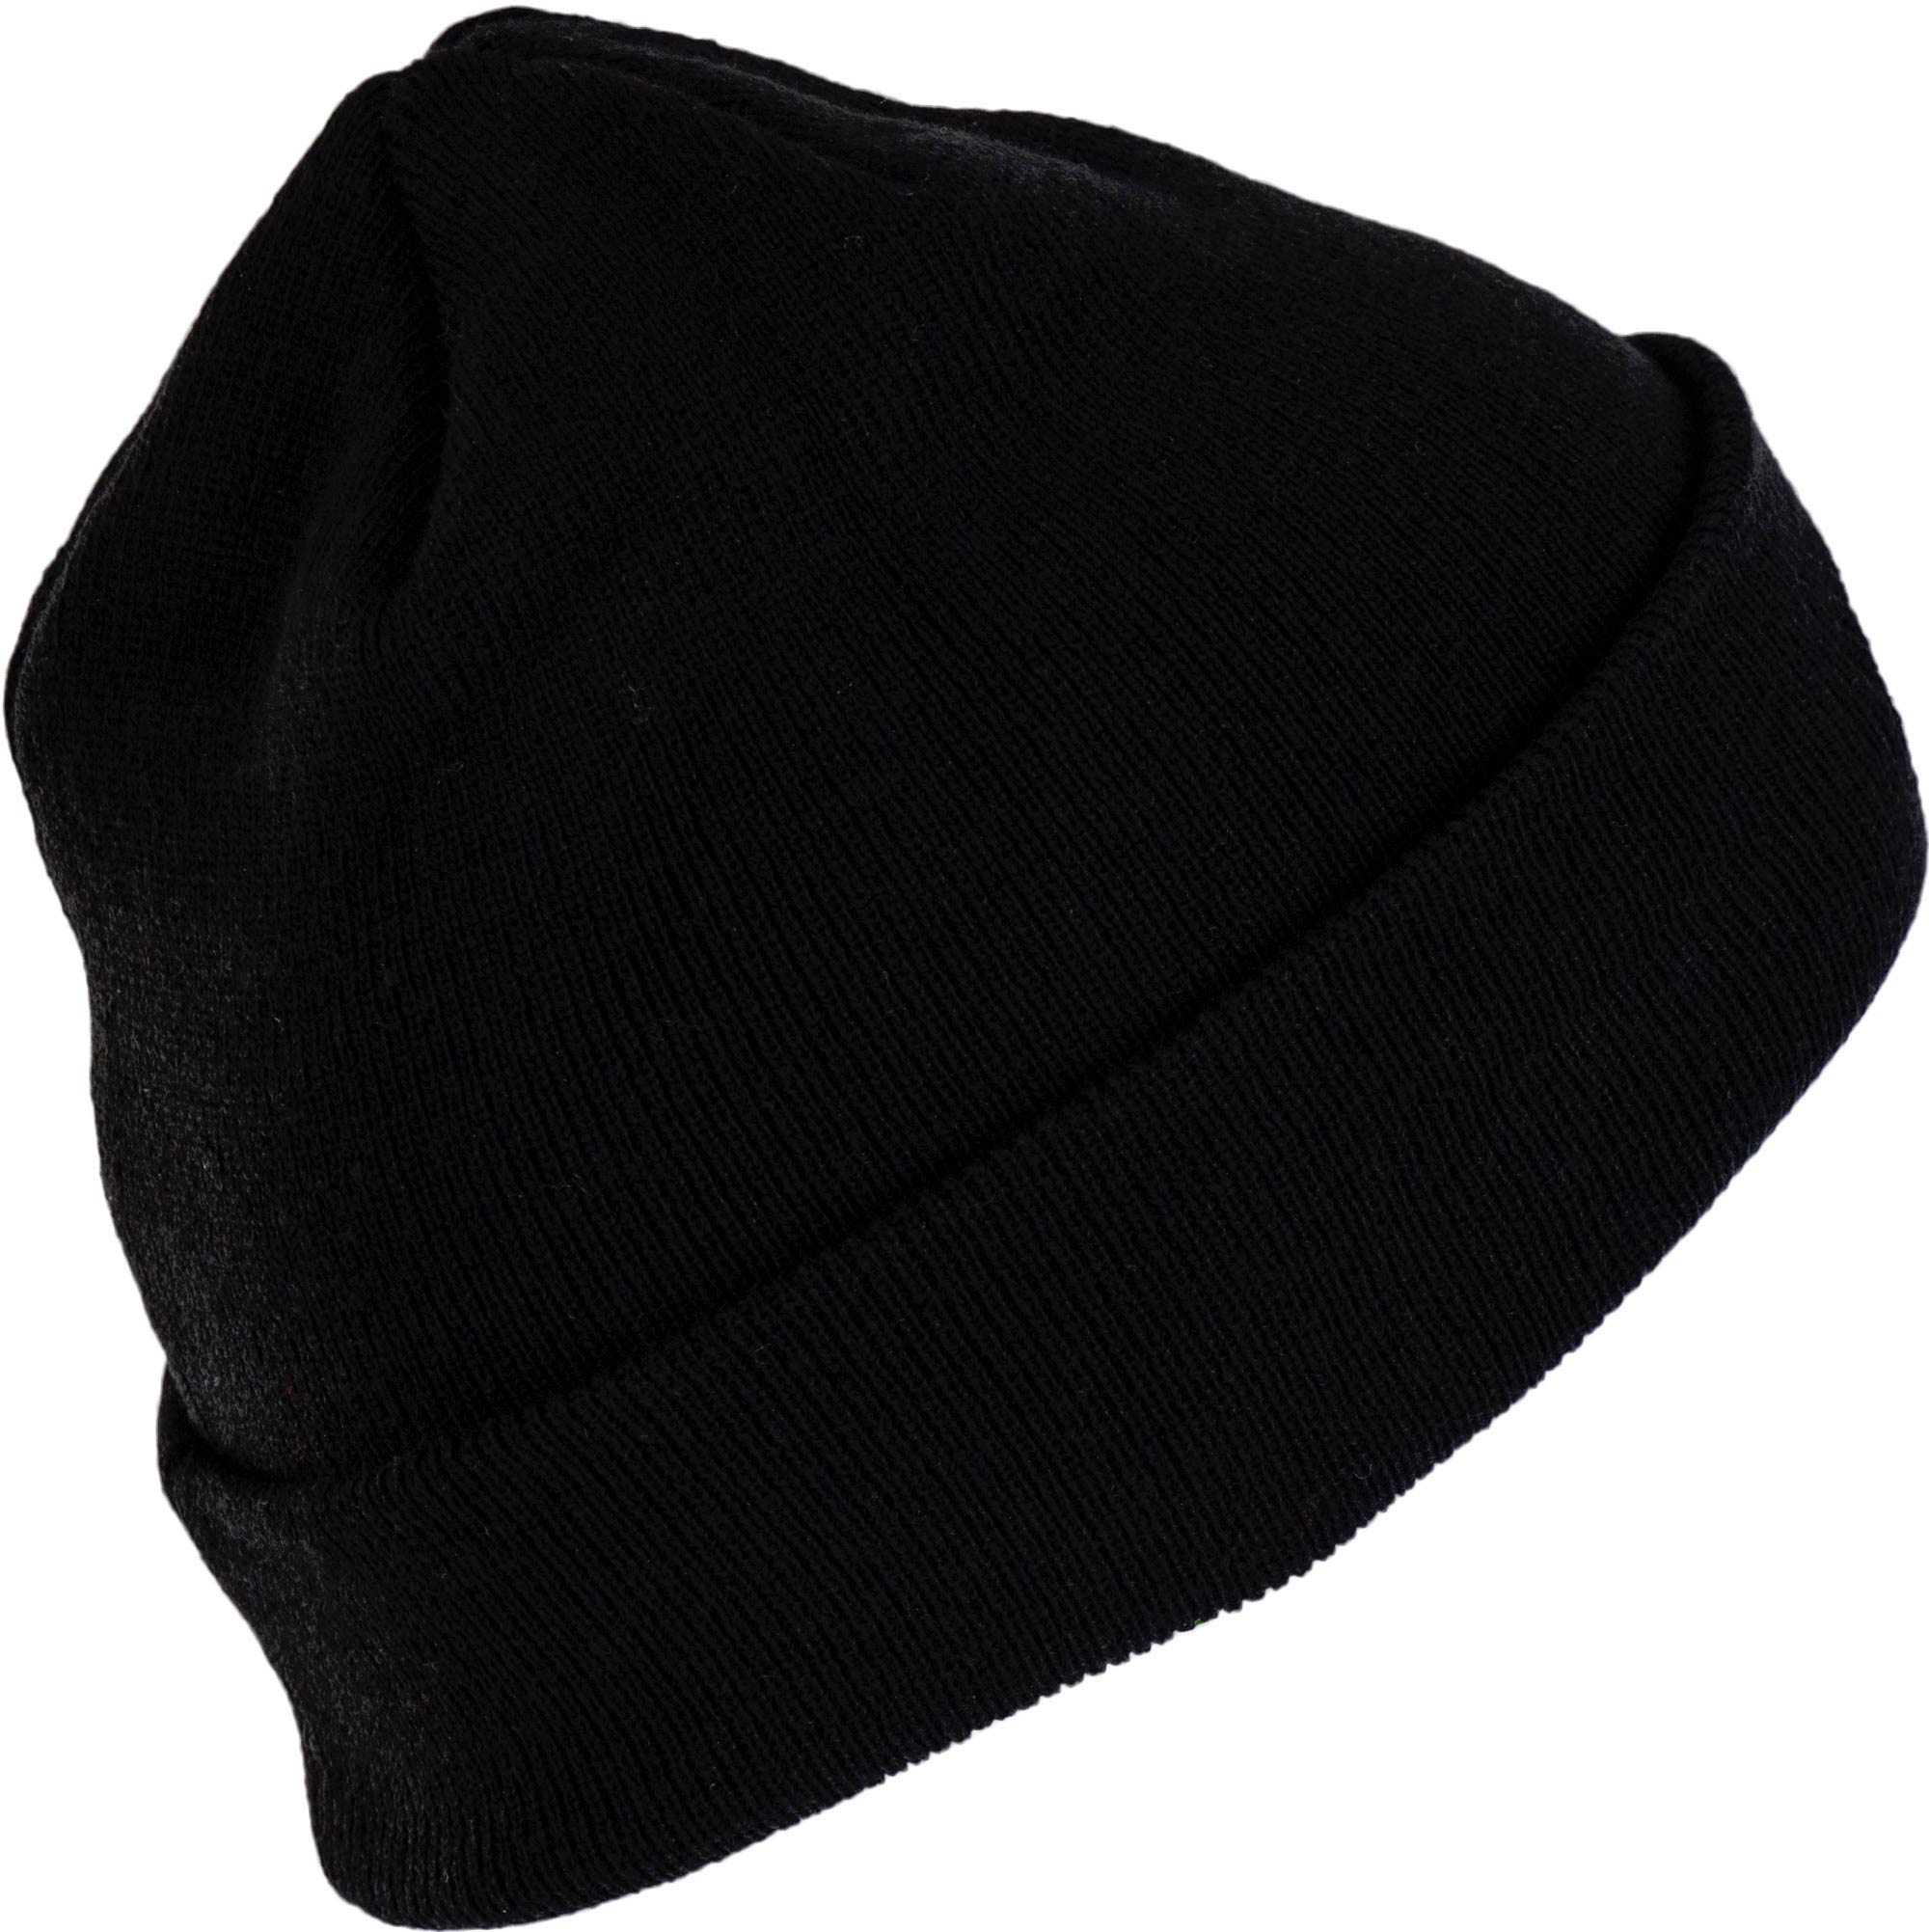 Club winter hat